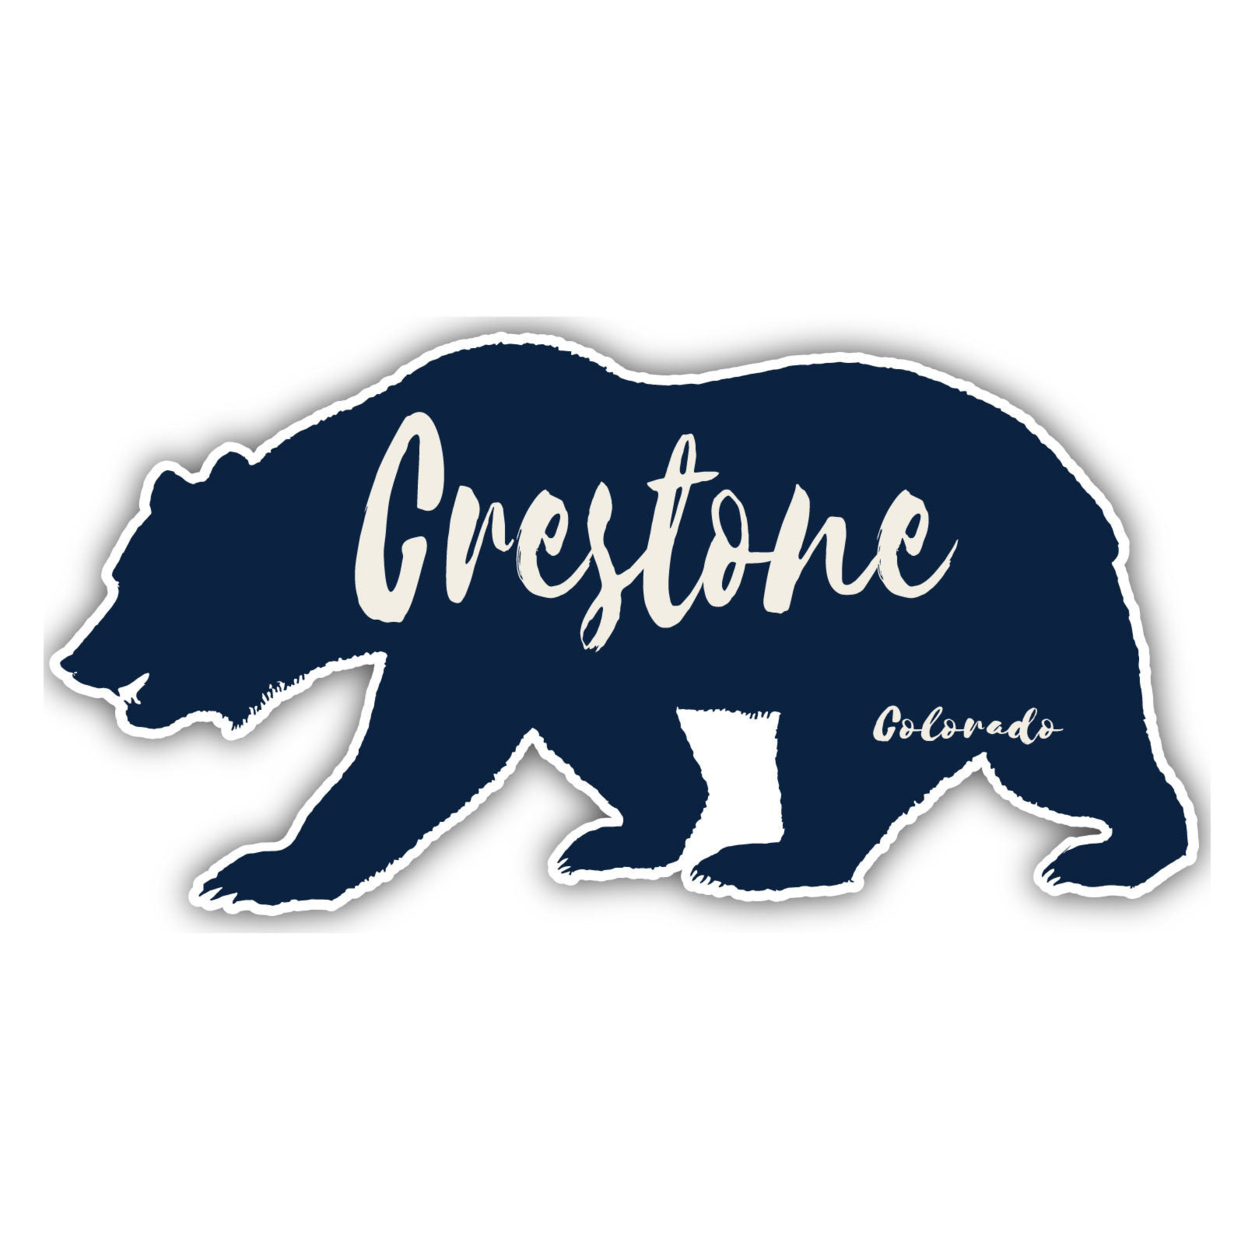 Crestone Colorado Souvenir Decorative Stickers (Choose Theme And Size) - Single Unit, 2-Inch, Tent